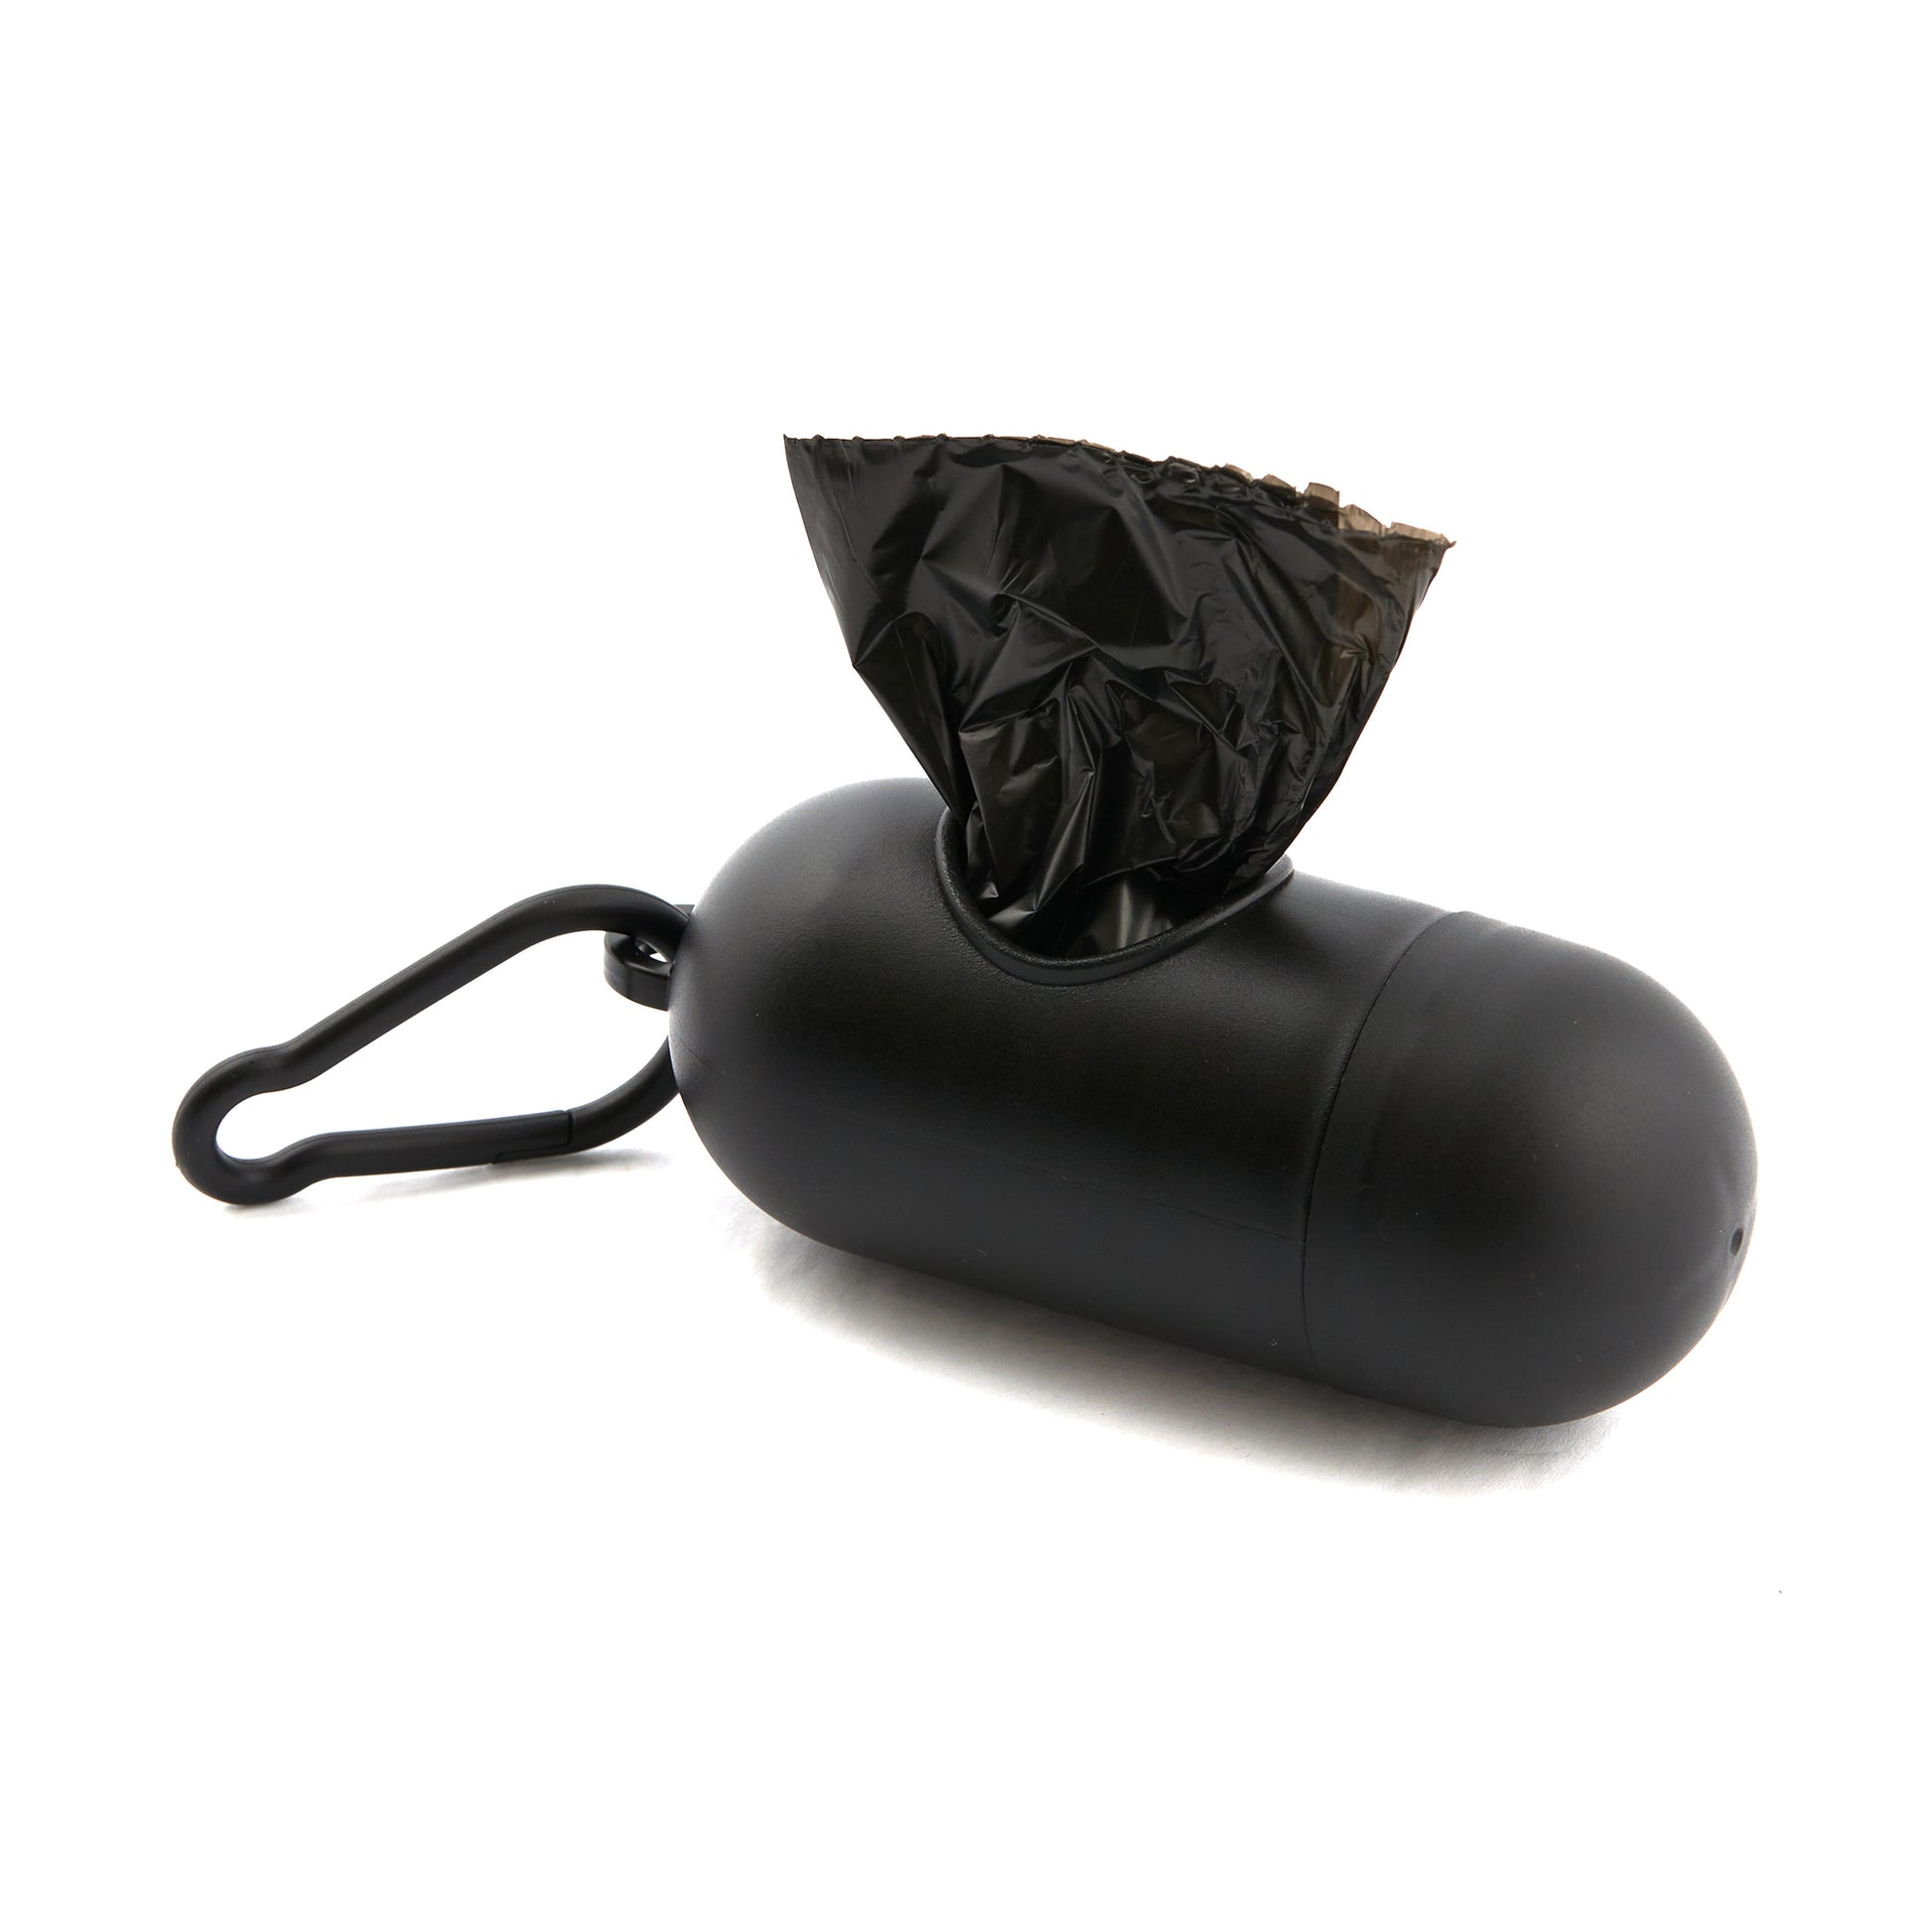 essentials dog poop bags with waste bag dispenser, 300 count, 20 pack of 15, black12